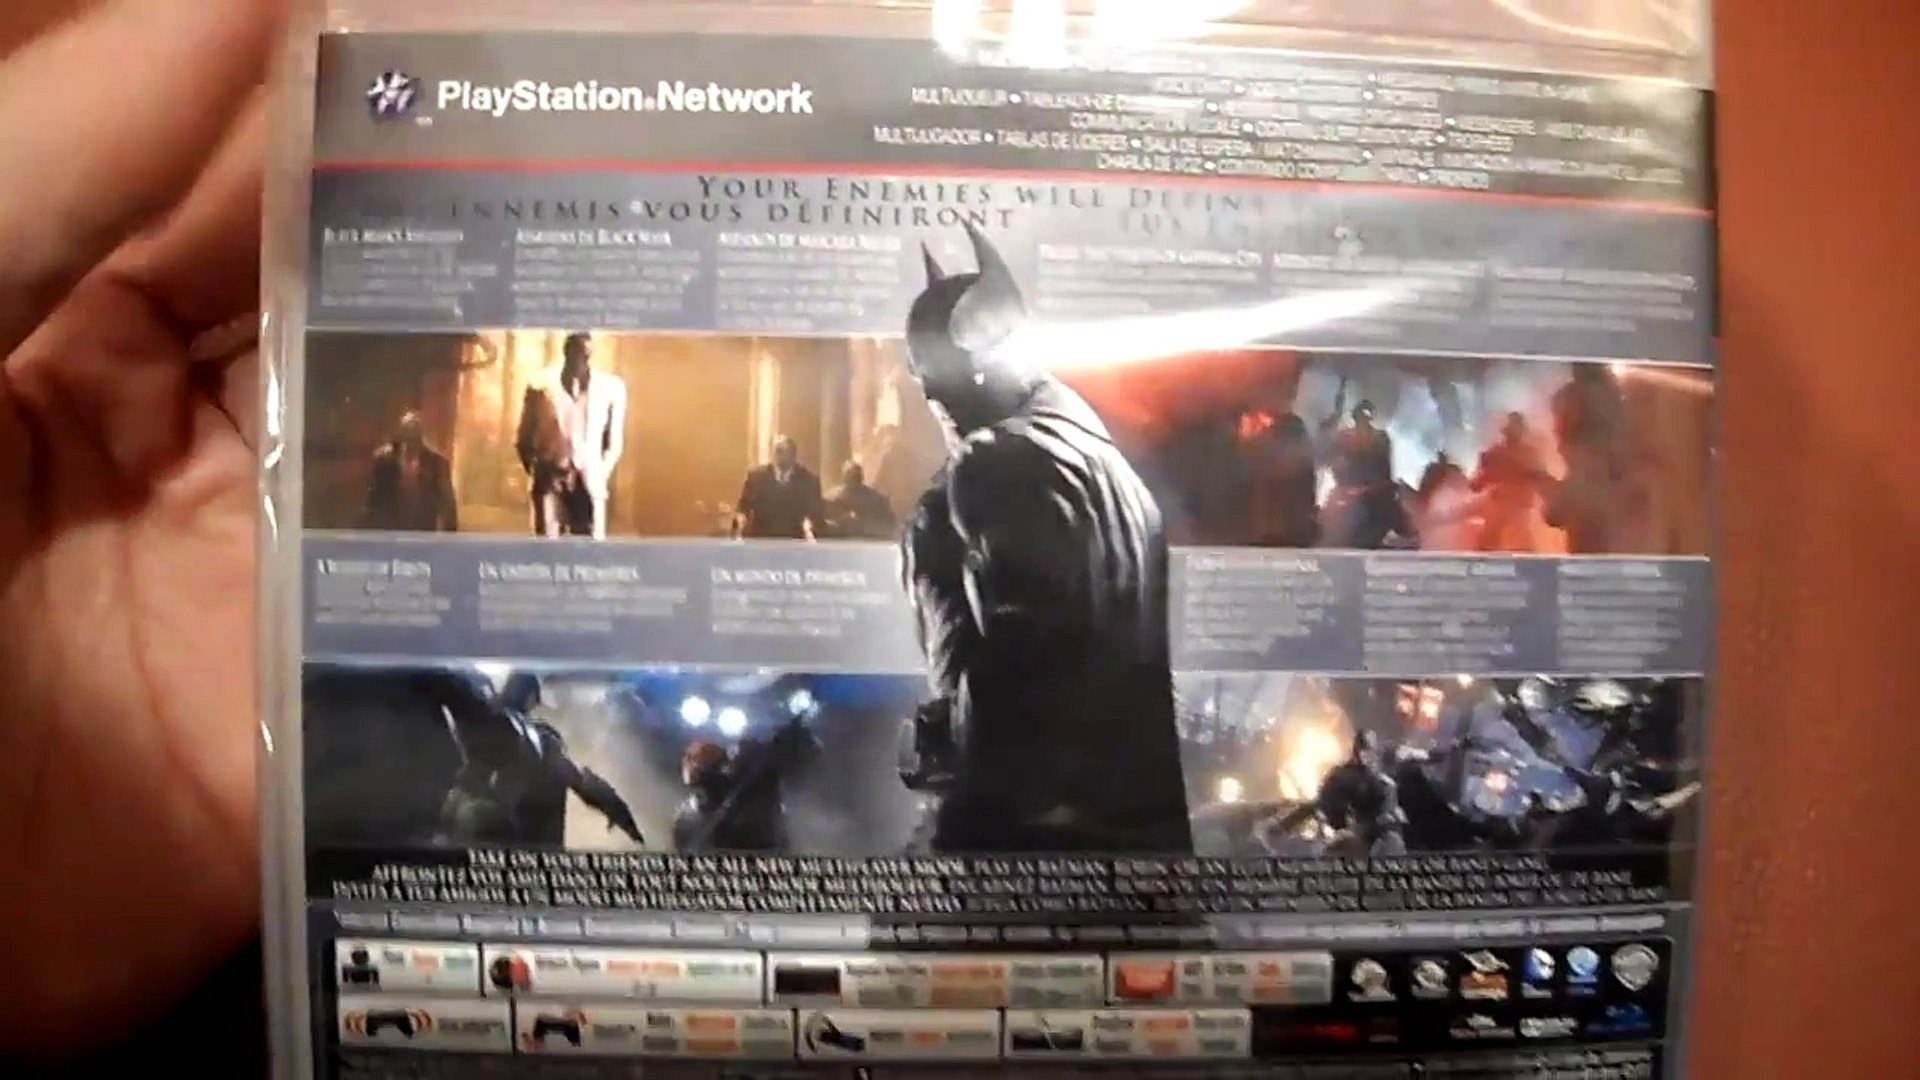 BATMAN PS5 MR FREEZE Boss Fight 4K ULTRA HD - Batman Arkham Knight - video  Dailymotion